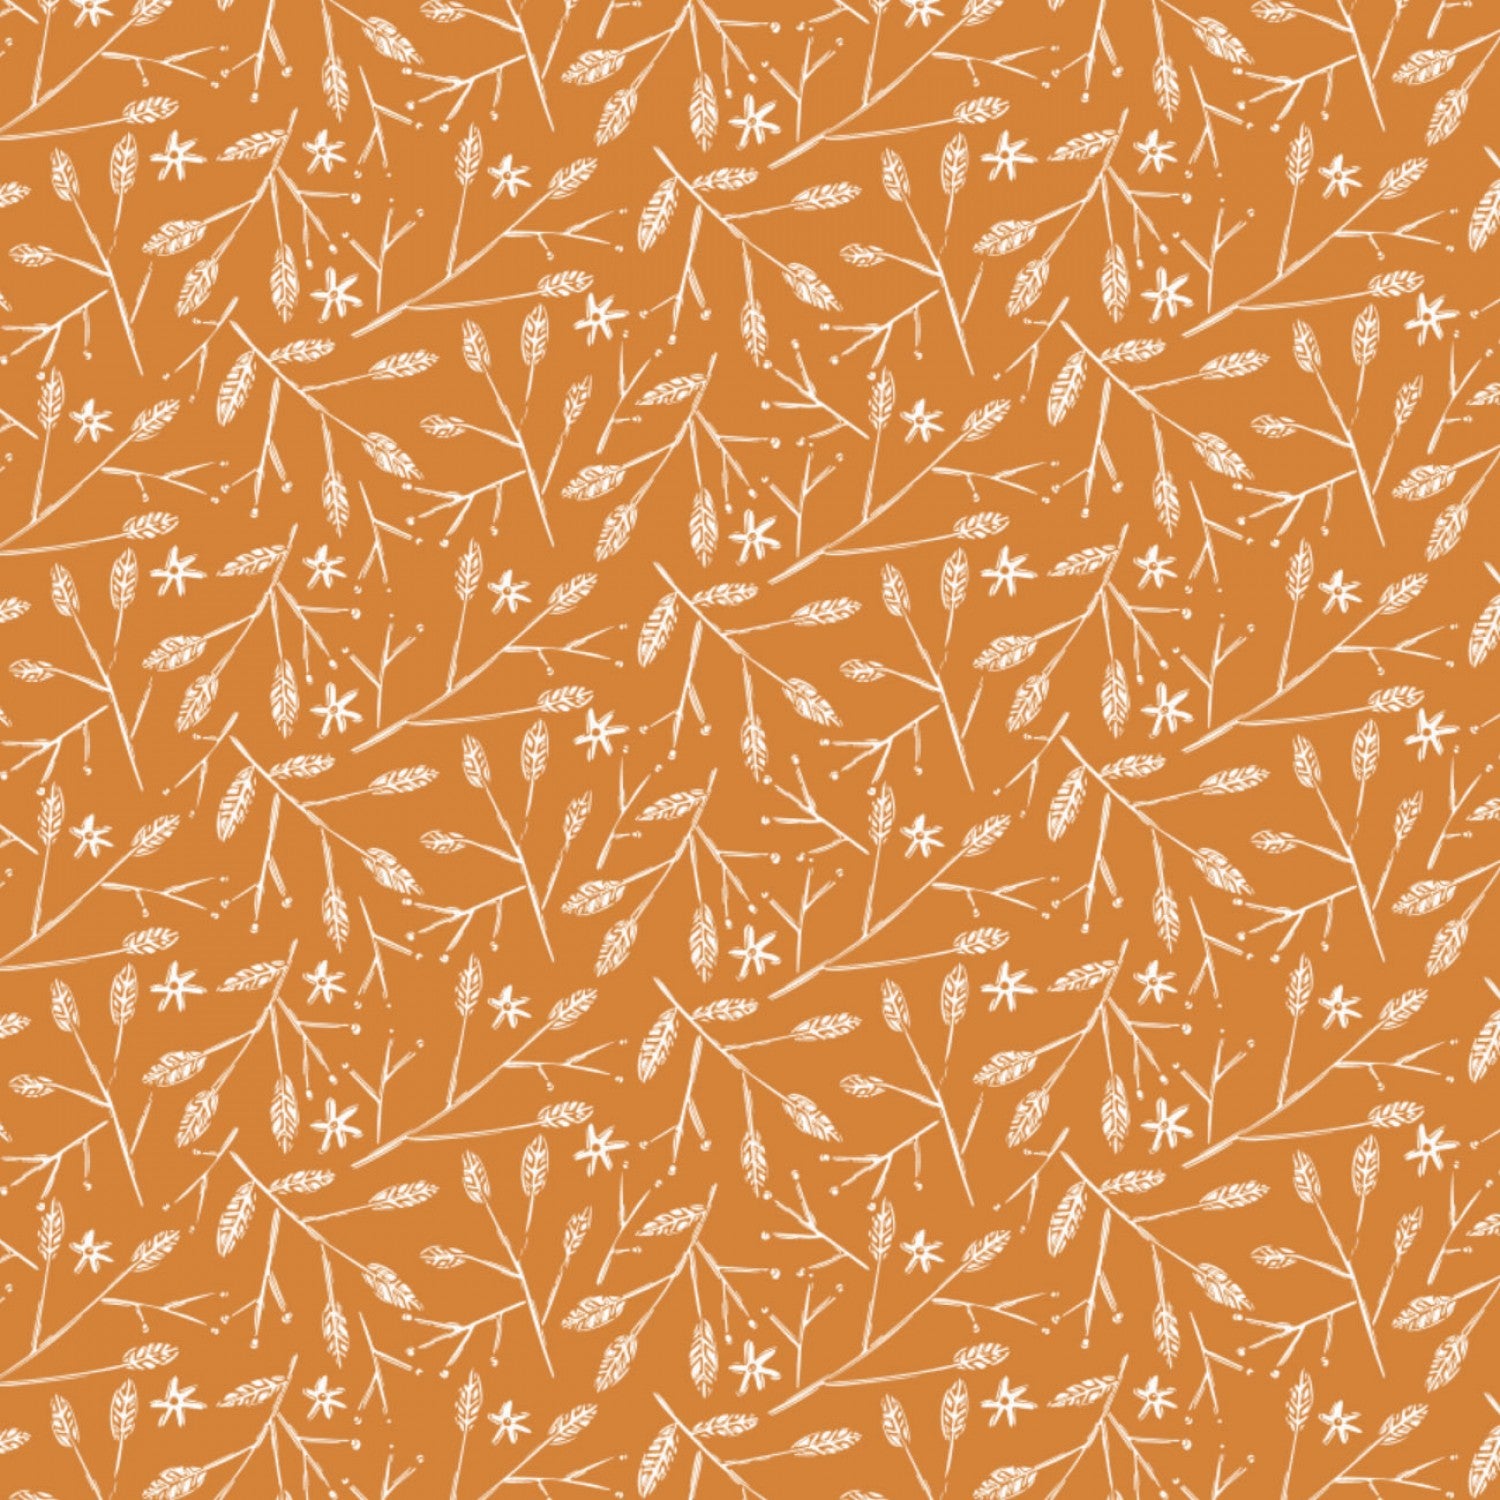 Harvest Time Orange Twigs Yardage designed by Vicky Yorke for Camelot Fabrics